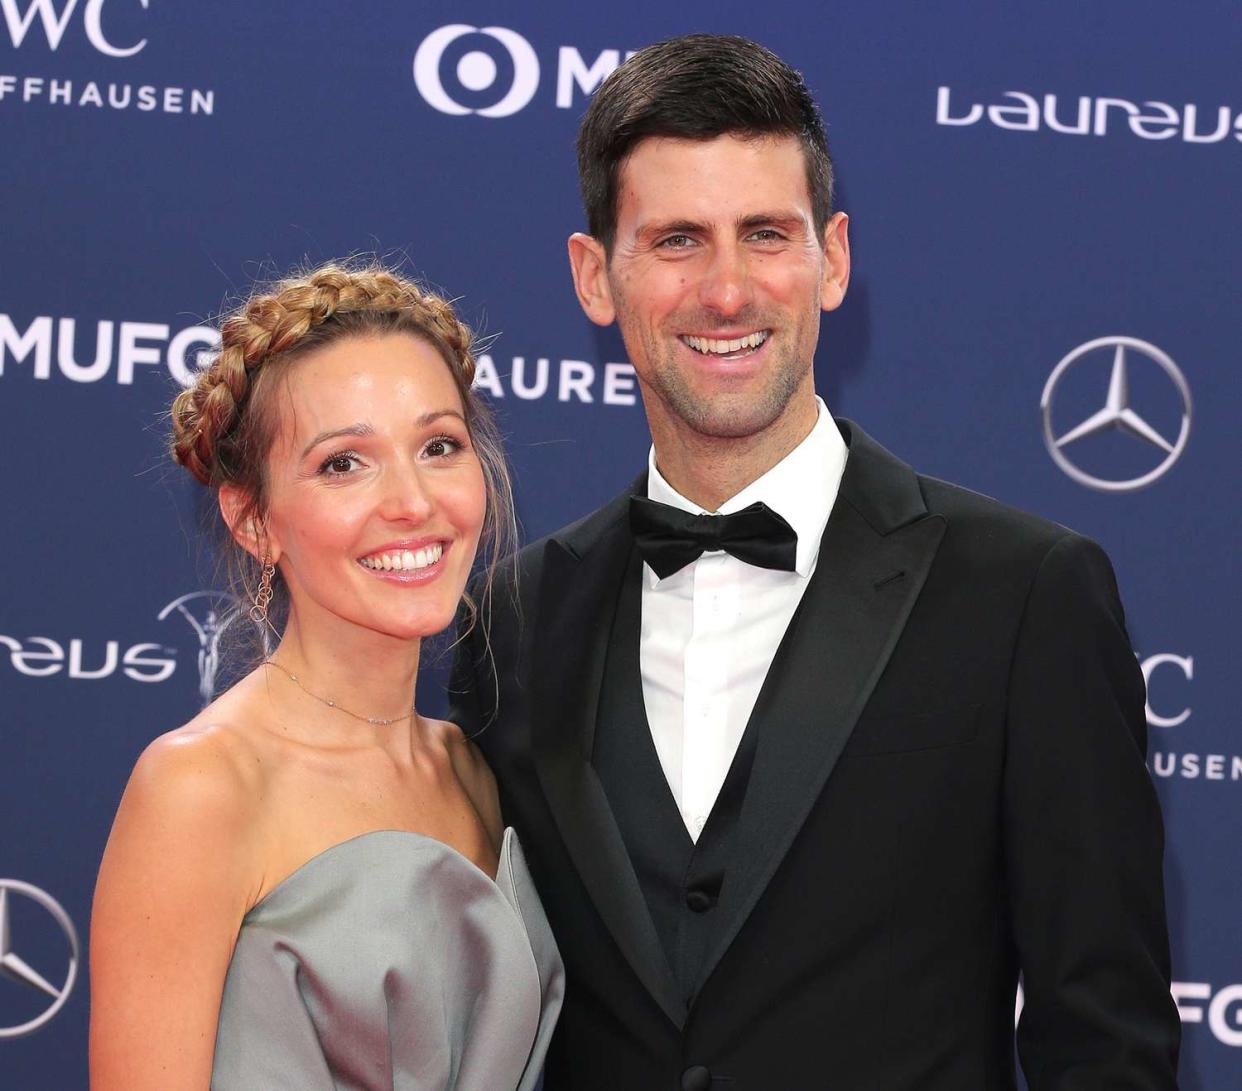 Novak Djokovic and his wife Jelena Ristic during the Laureus World Sports Awards 2019 at Sporting Club on February 18, 2019 in Monaco, Monaco